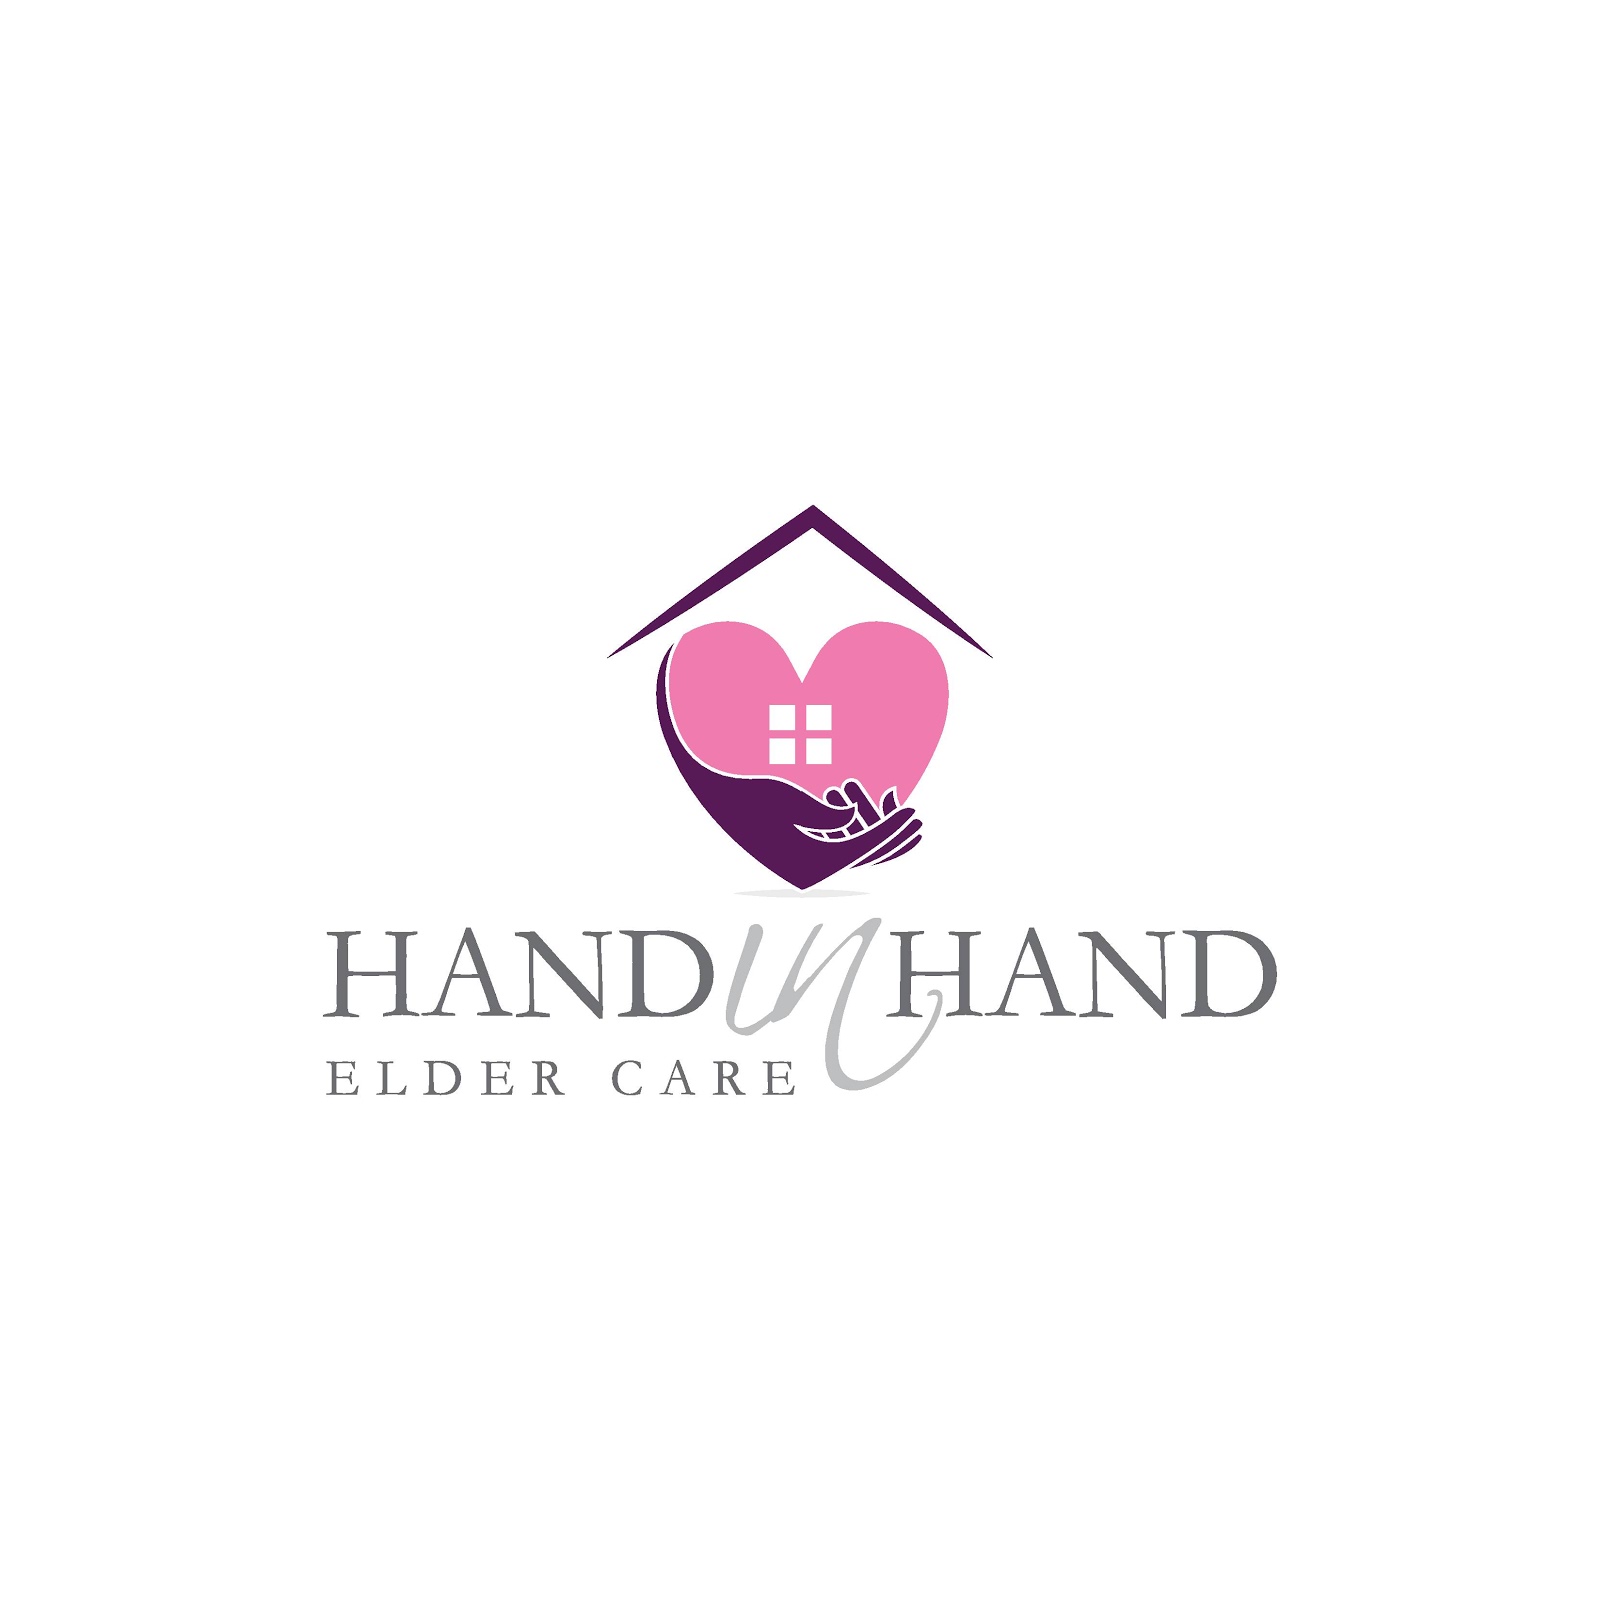 Photo of Hand in Hand Elder Care - Senior Placement Advisors in Cedarhurst City, New York, United States - 1 Picture of Point of interest, Establishment, Health